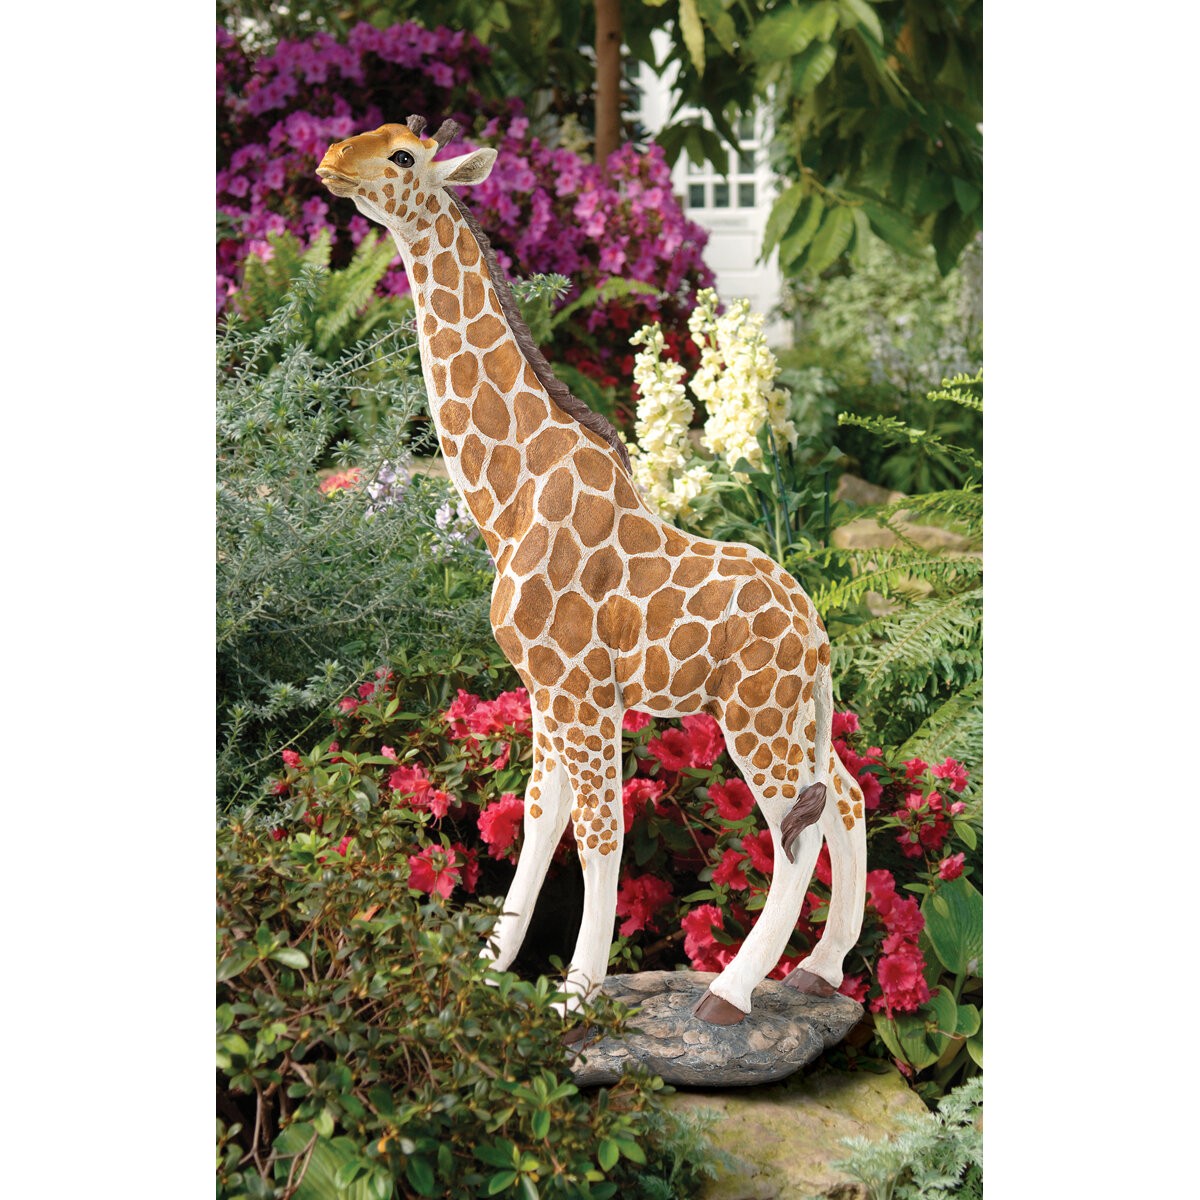 Wood giraffe statue